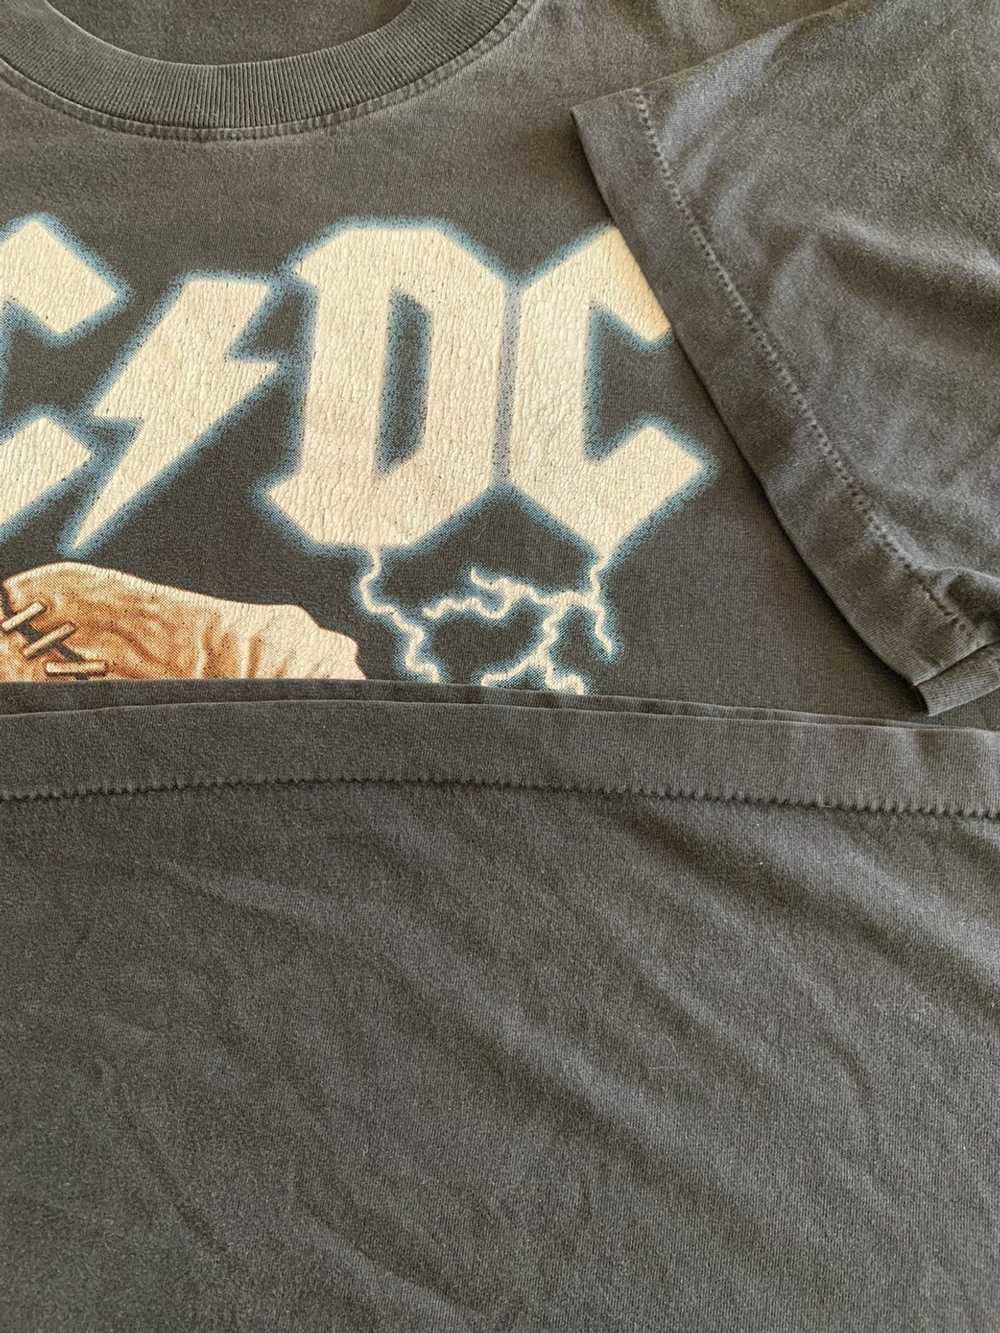 Band Tees × Vintage Vintage AC/DC band shirt - image 4